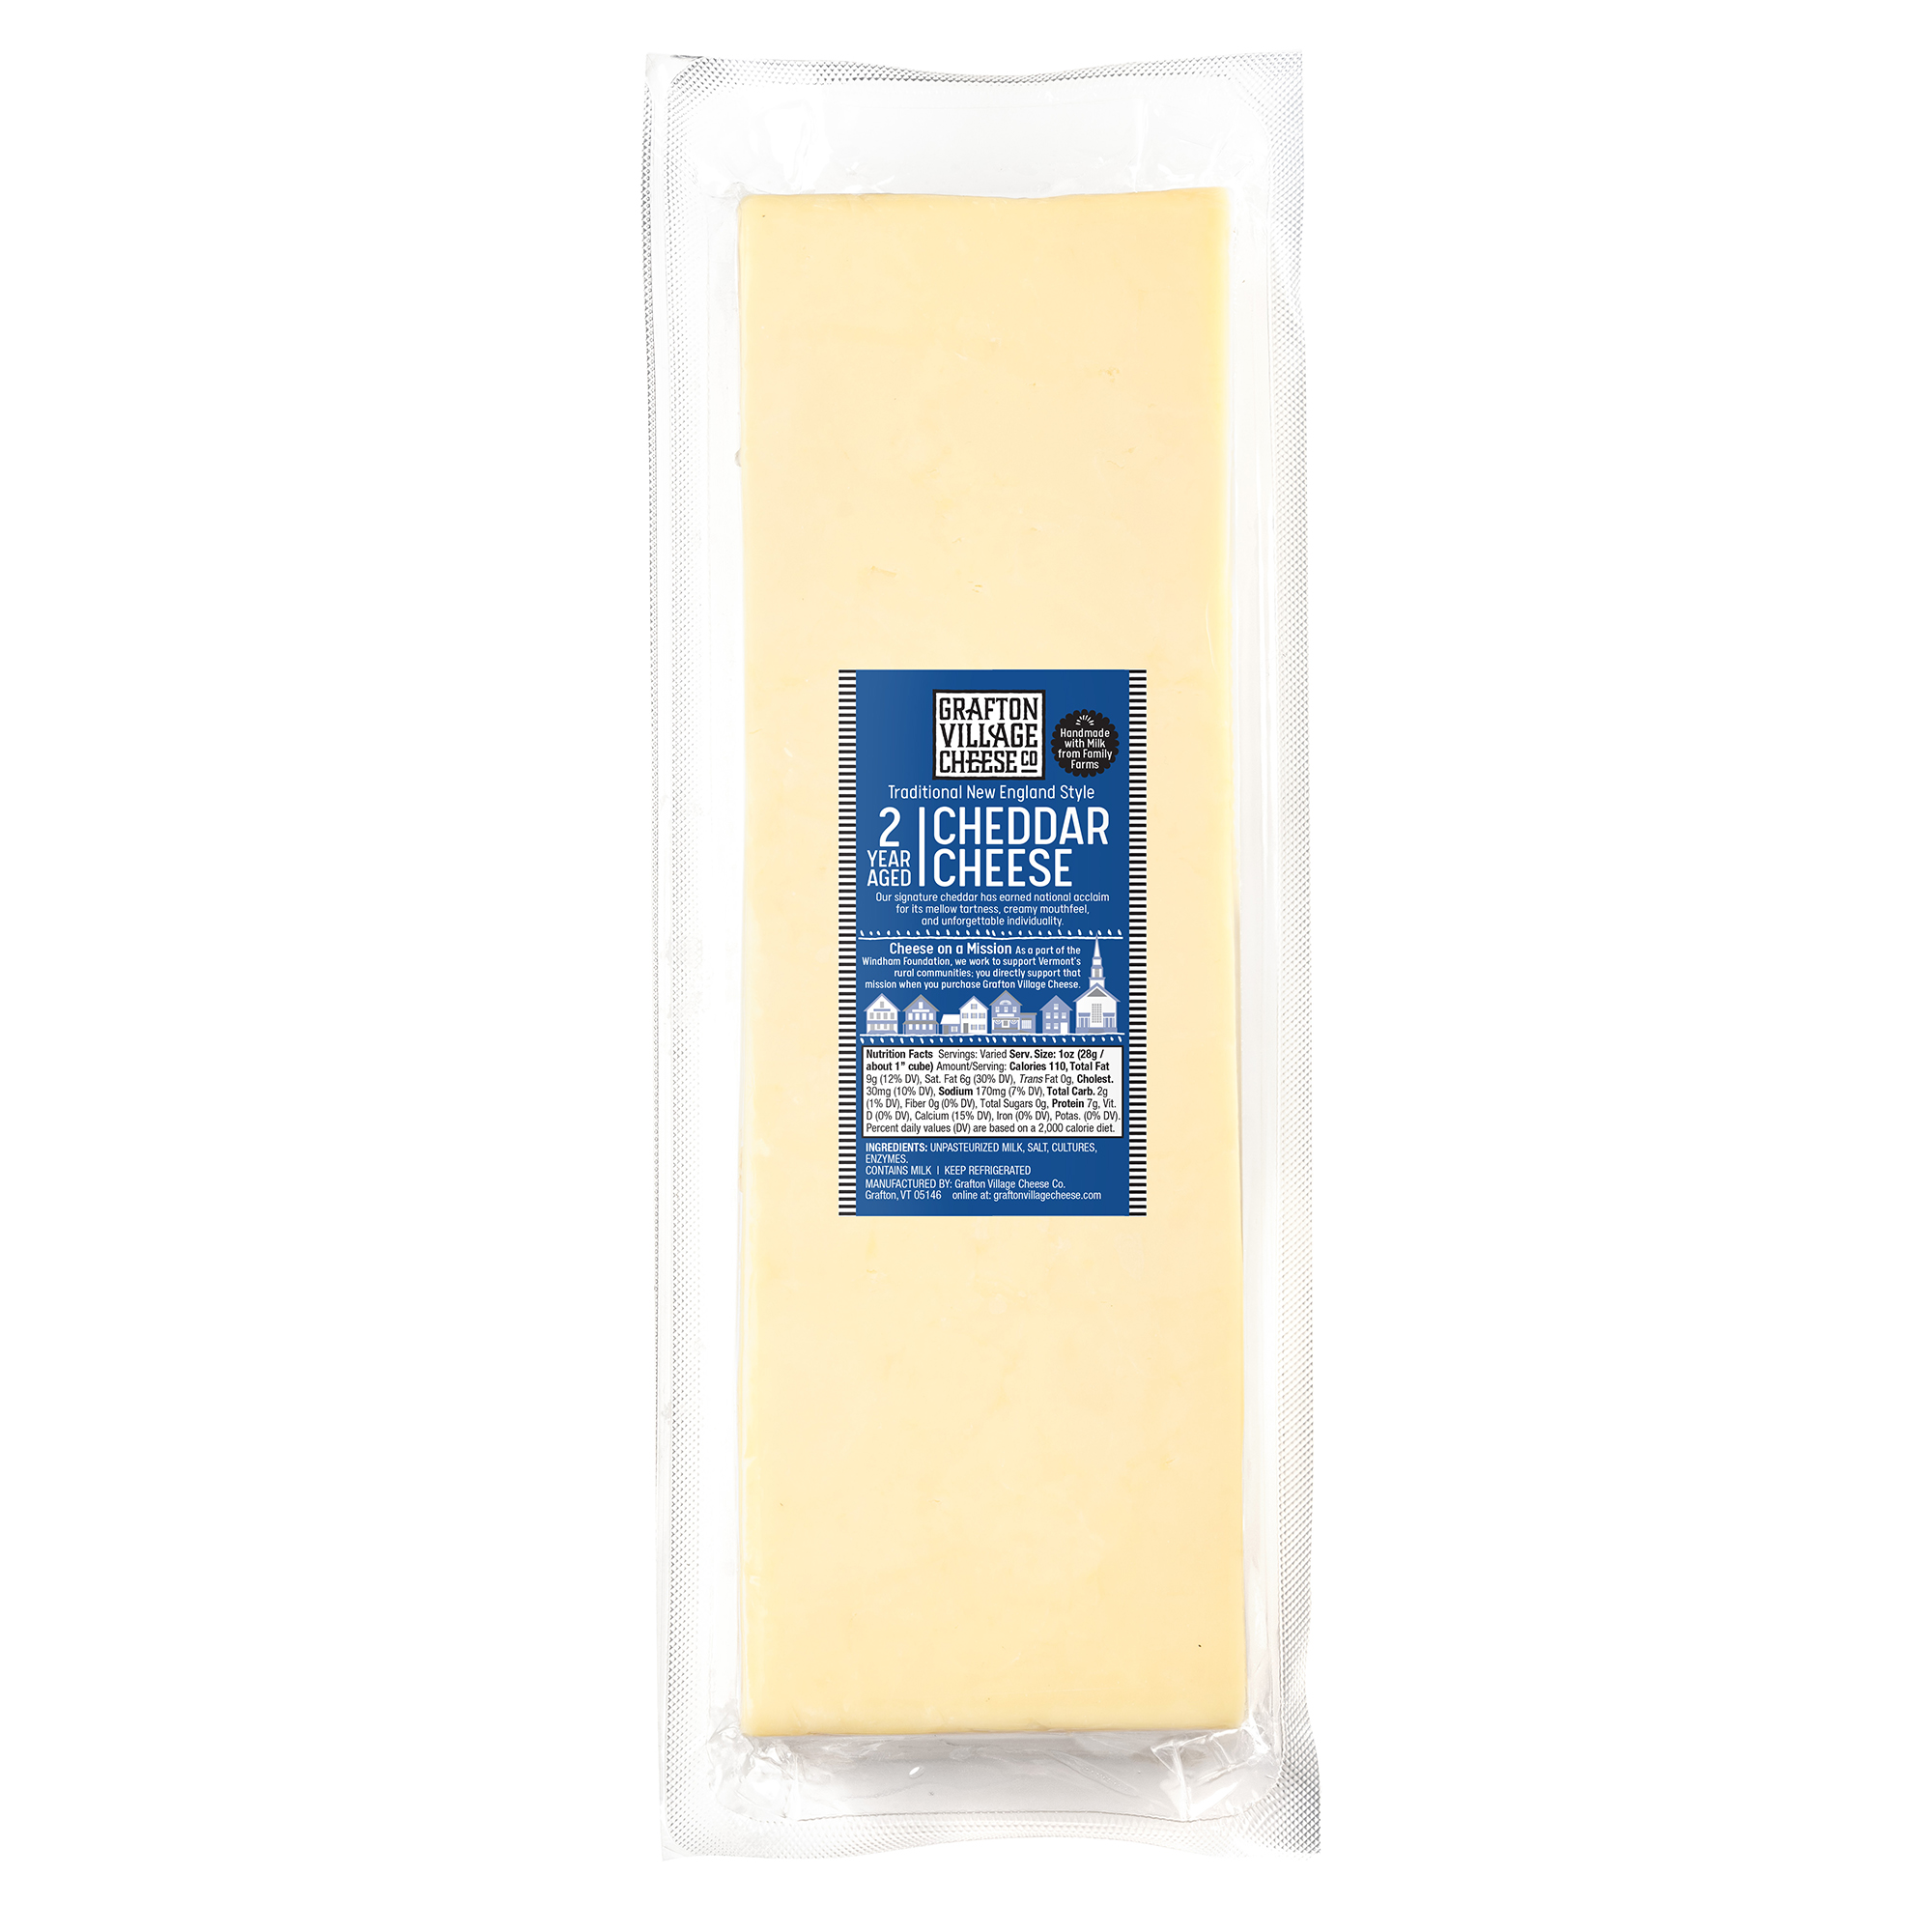 Wholesale 2 Year Aged Cheddar | Grafton Village Cheese